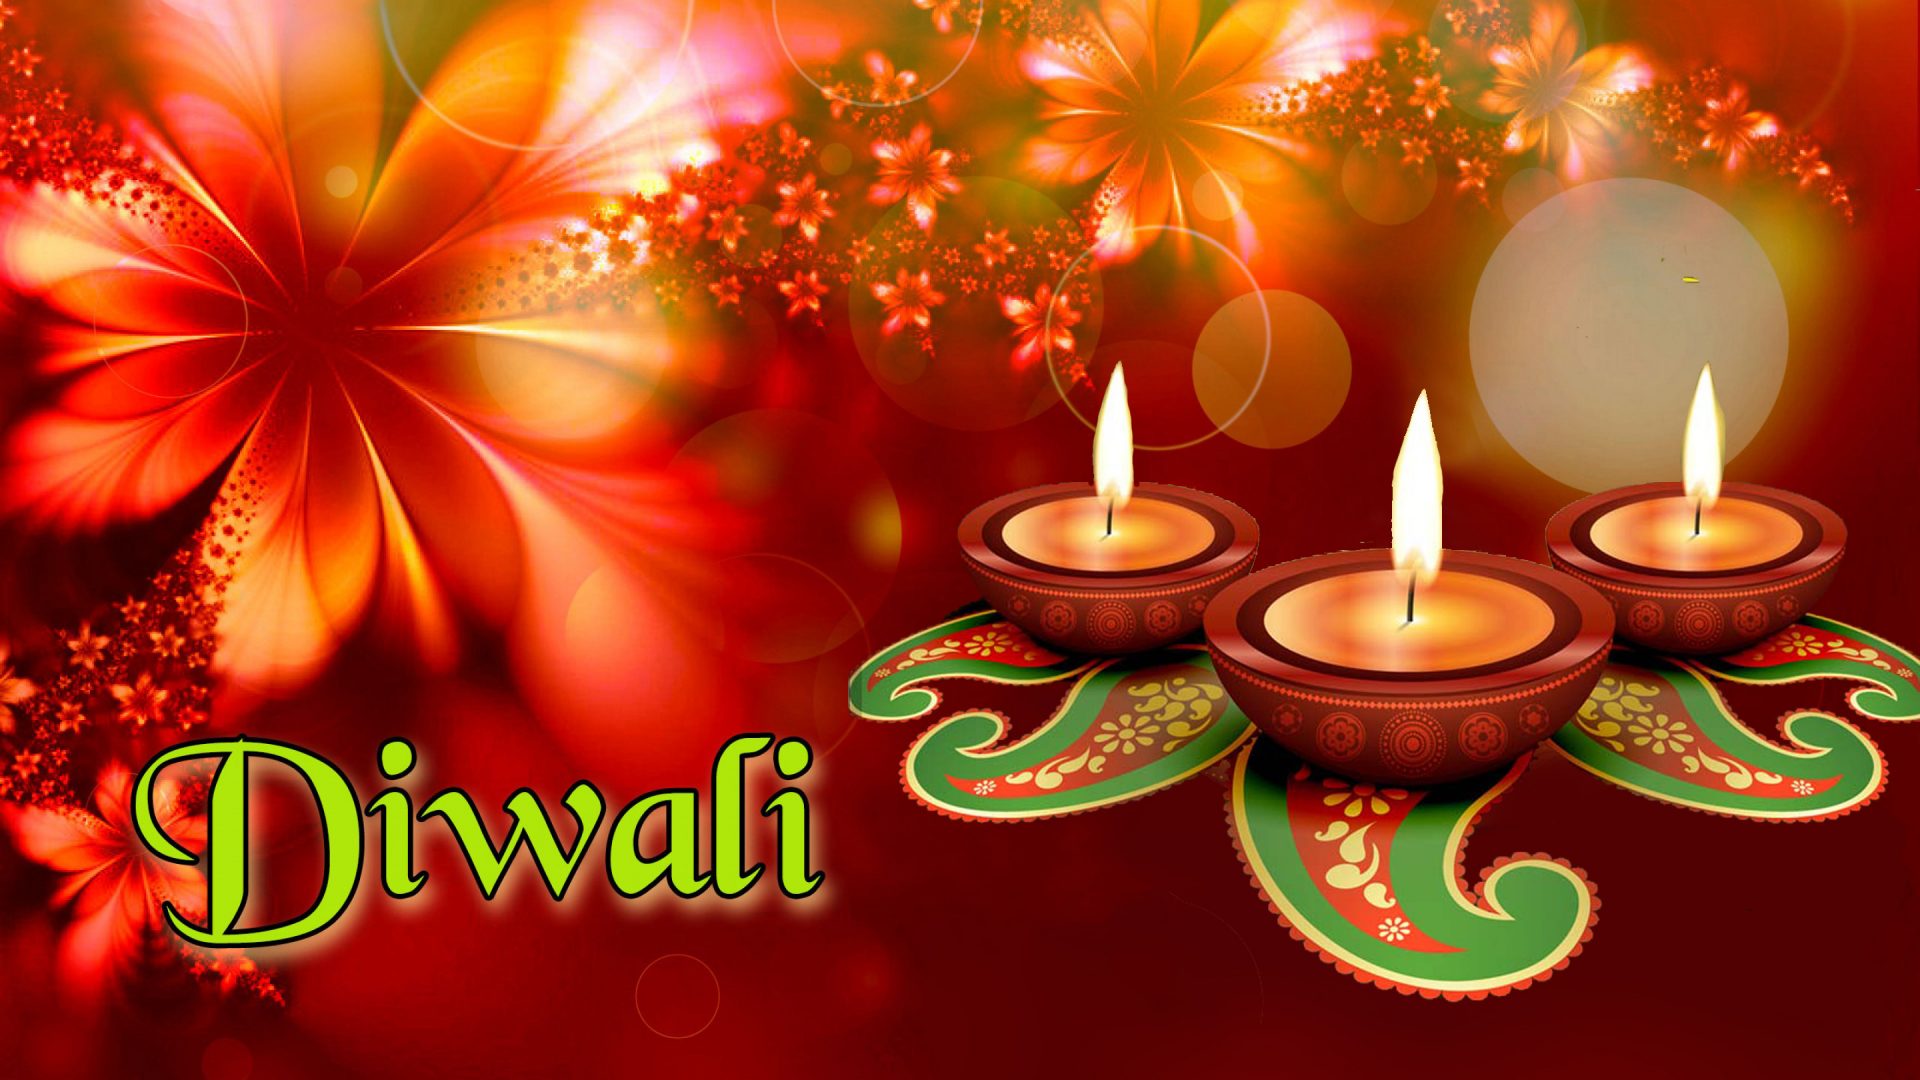 Diwali Images Download Hd - HD Wallpaper 